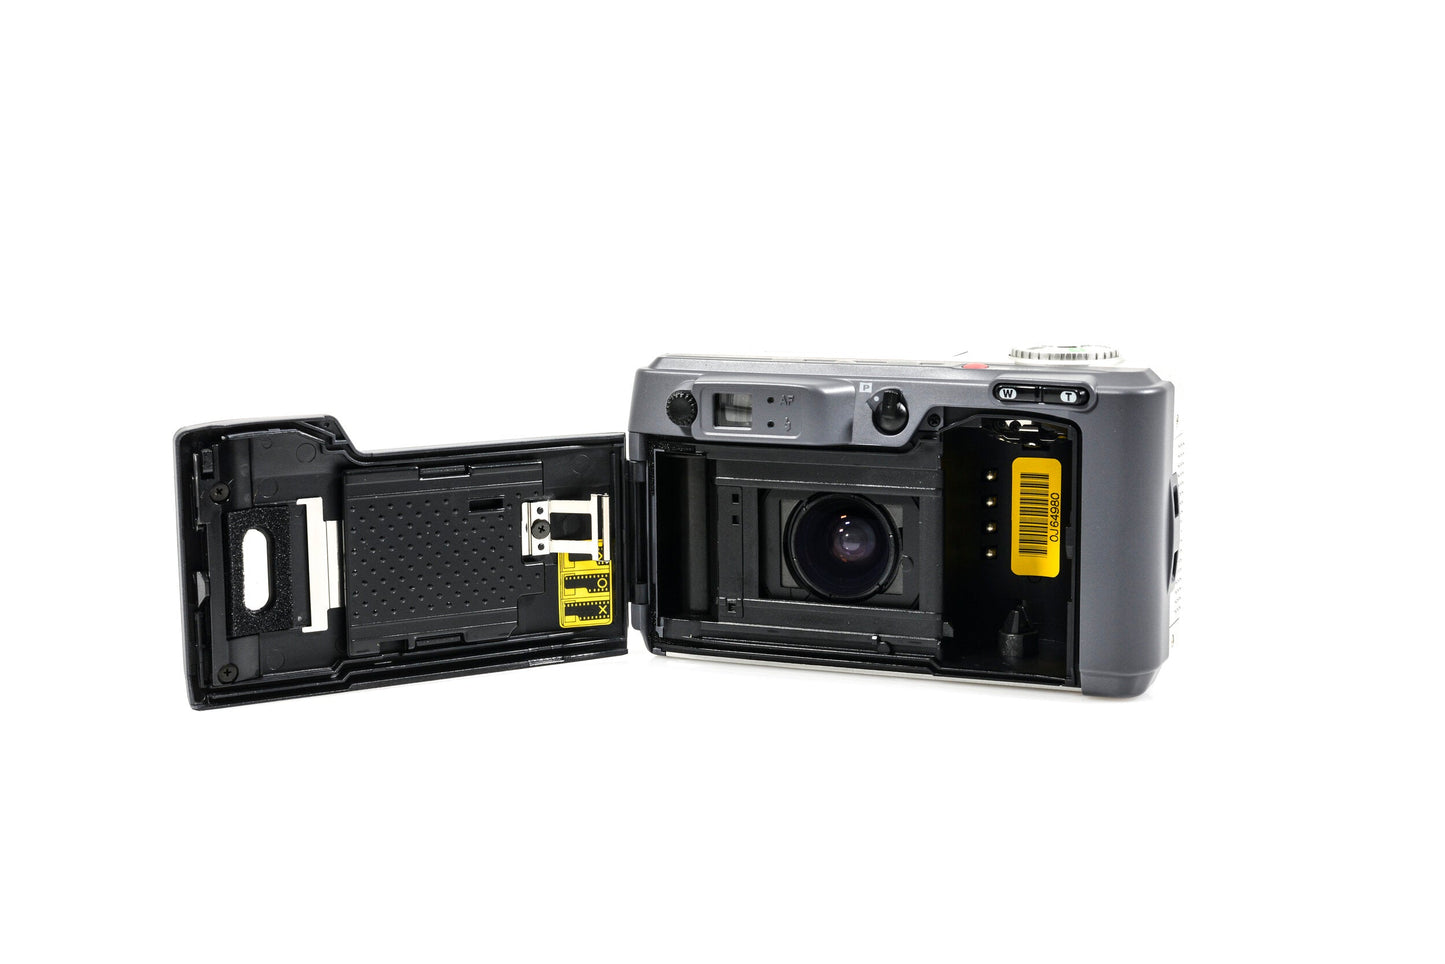 Ex-Demo Samsung Fino 170 Super Panorama 35mm Point and Shoot Film Camera